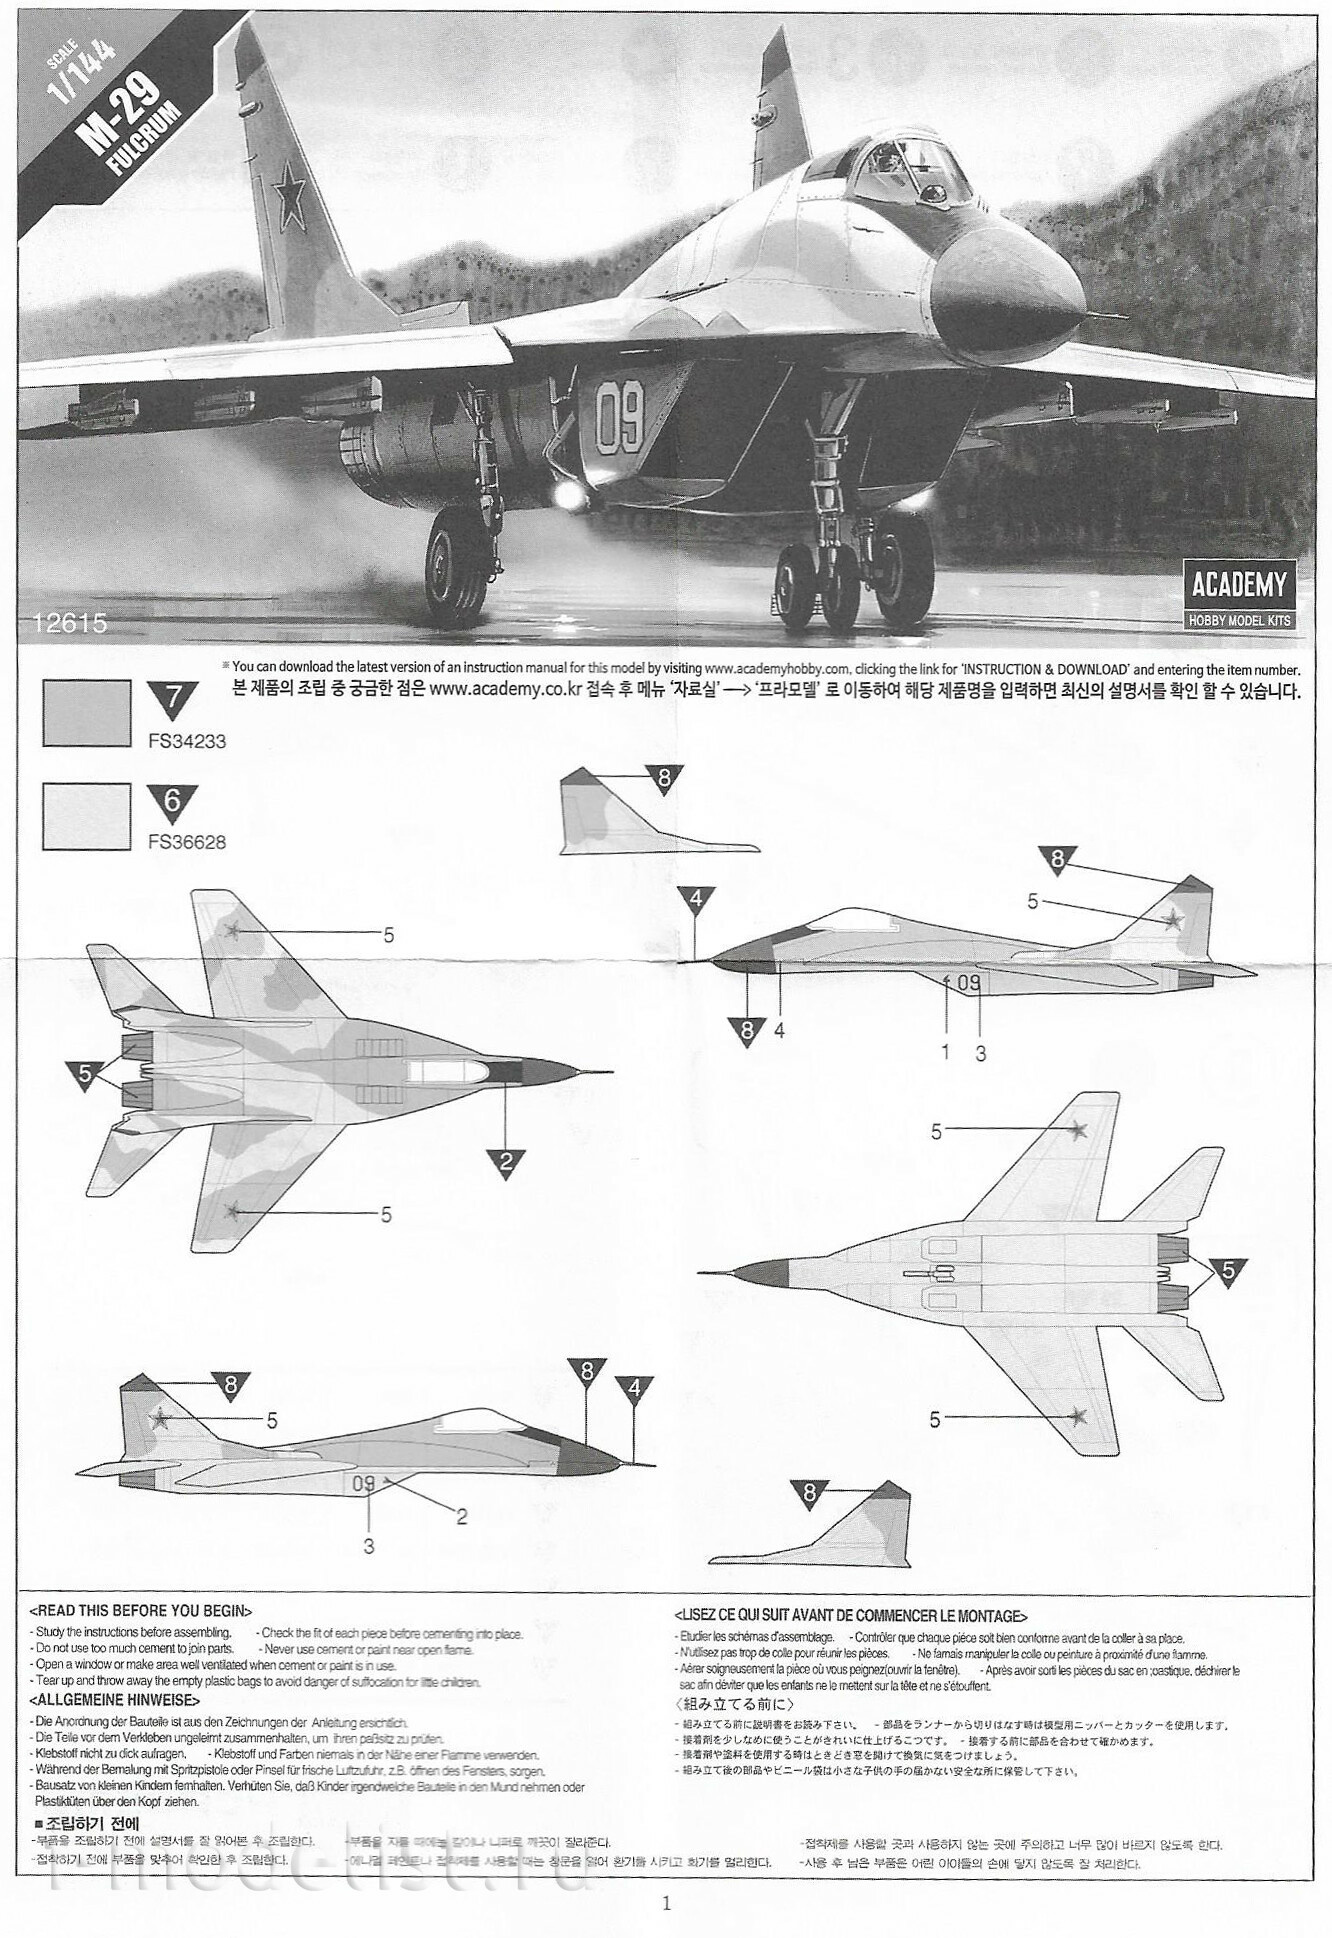 12615 Academy 1/144 MiG-29